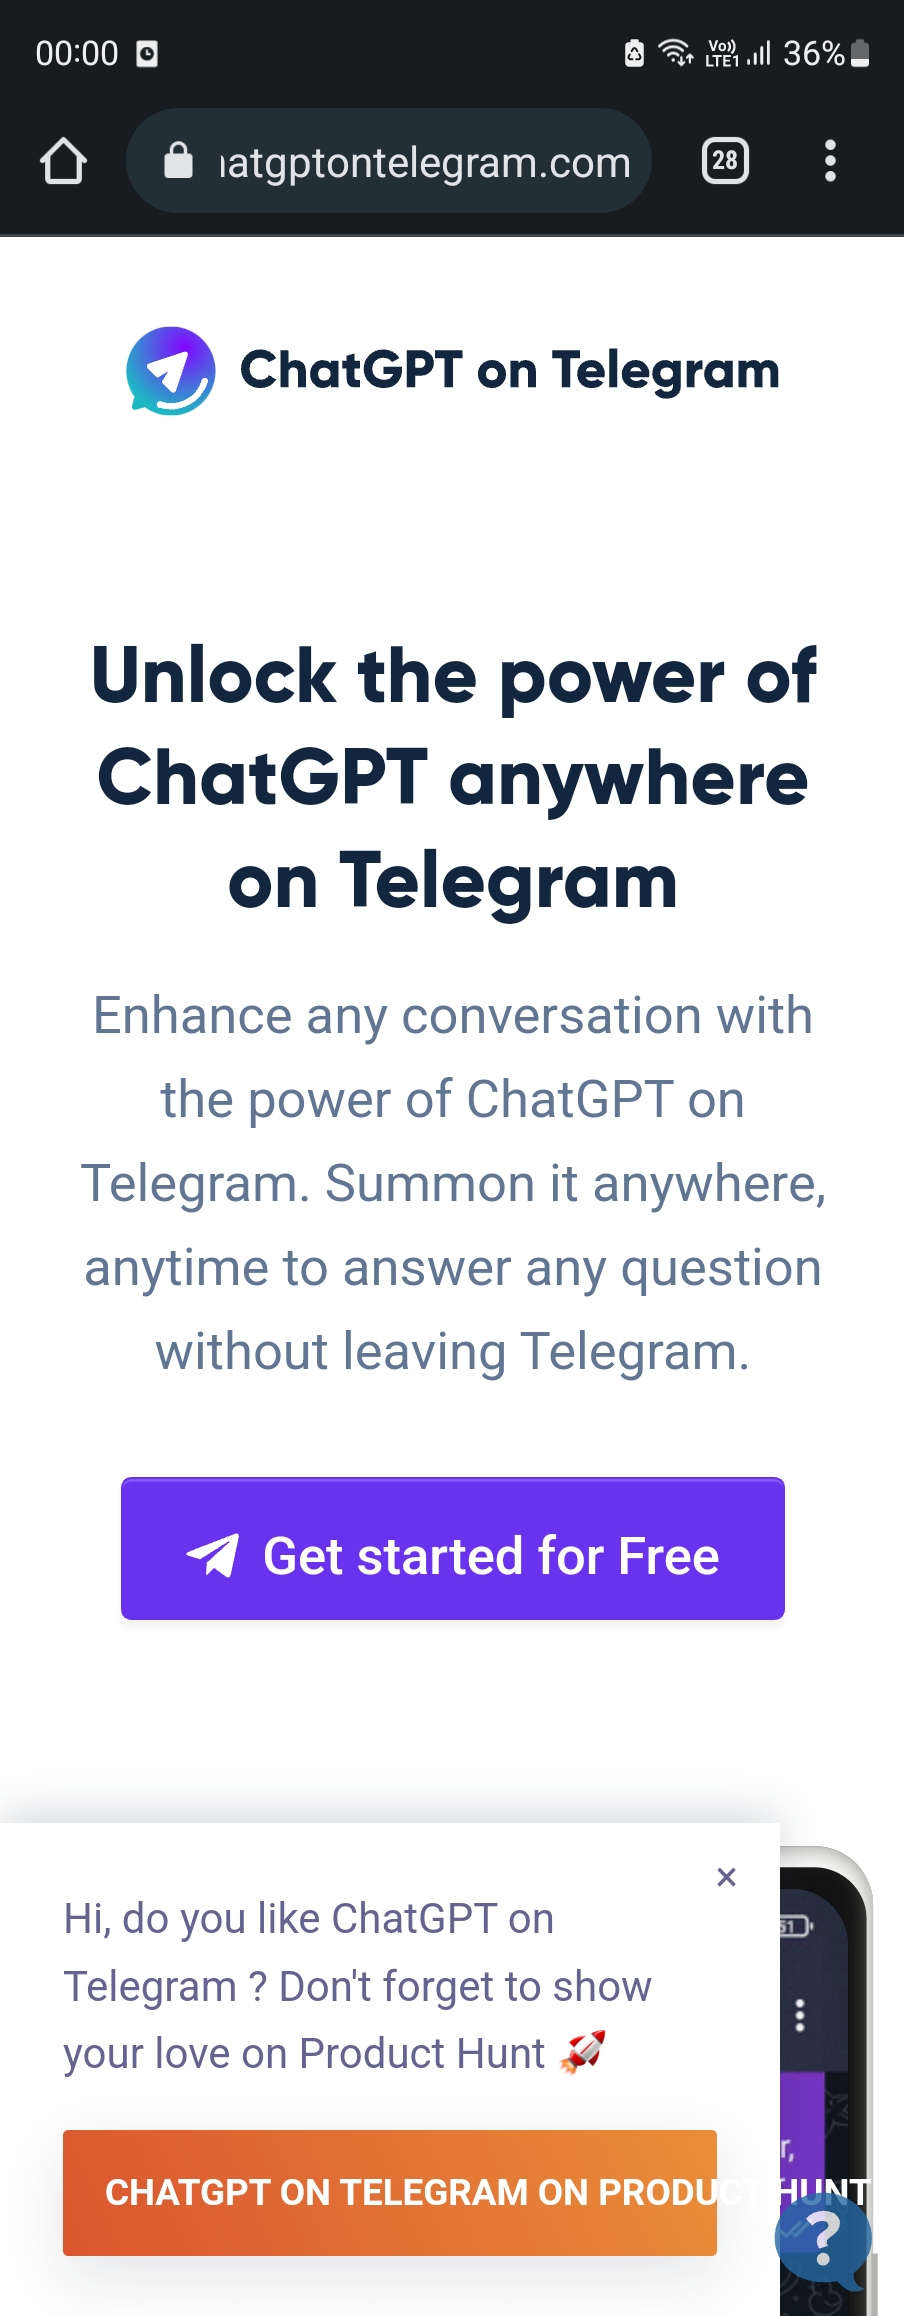 Sitio web oficial del bot ChatGPTonTelegram